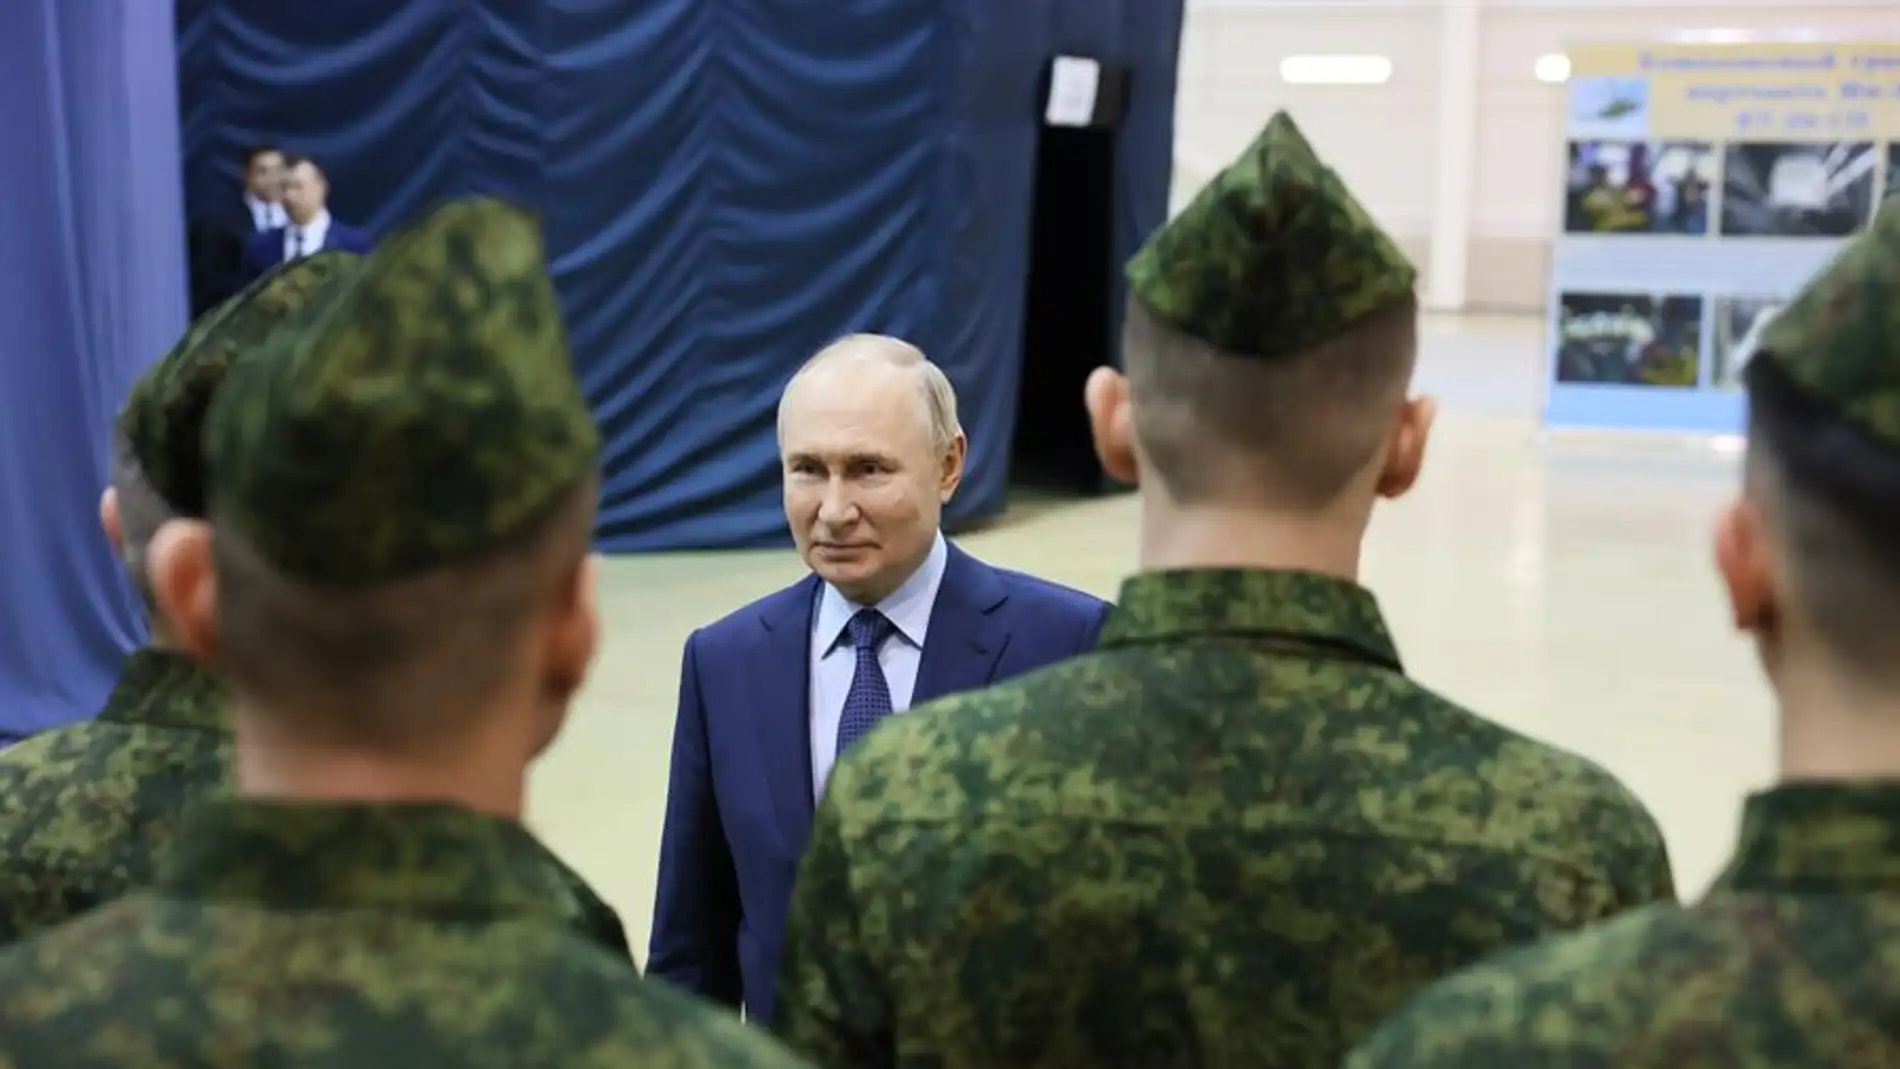 Putin tacha de "total disparate" declaraciones acerca de que Rusia quiere atacar a Europa